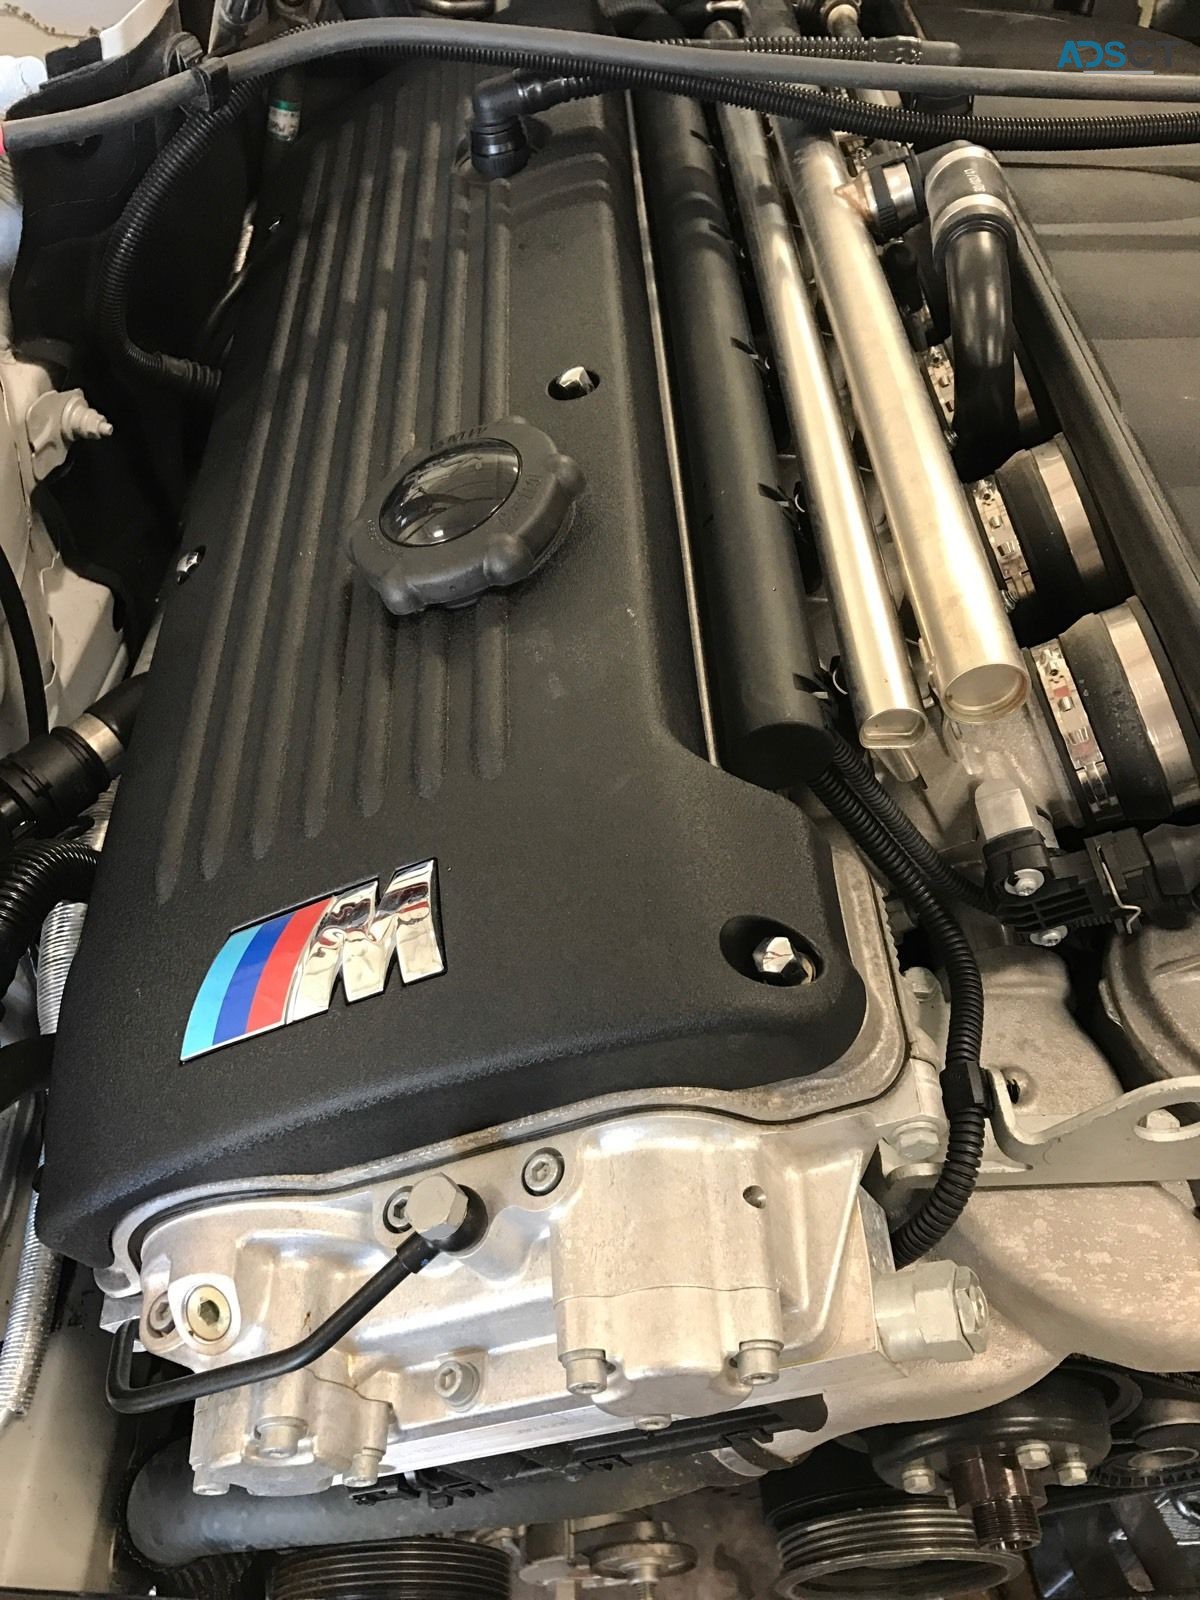 01-06 BMW E46 M3 S54 3.2L ENGINE MOTOR